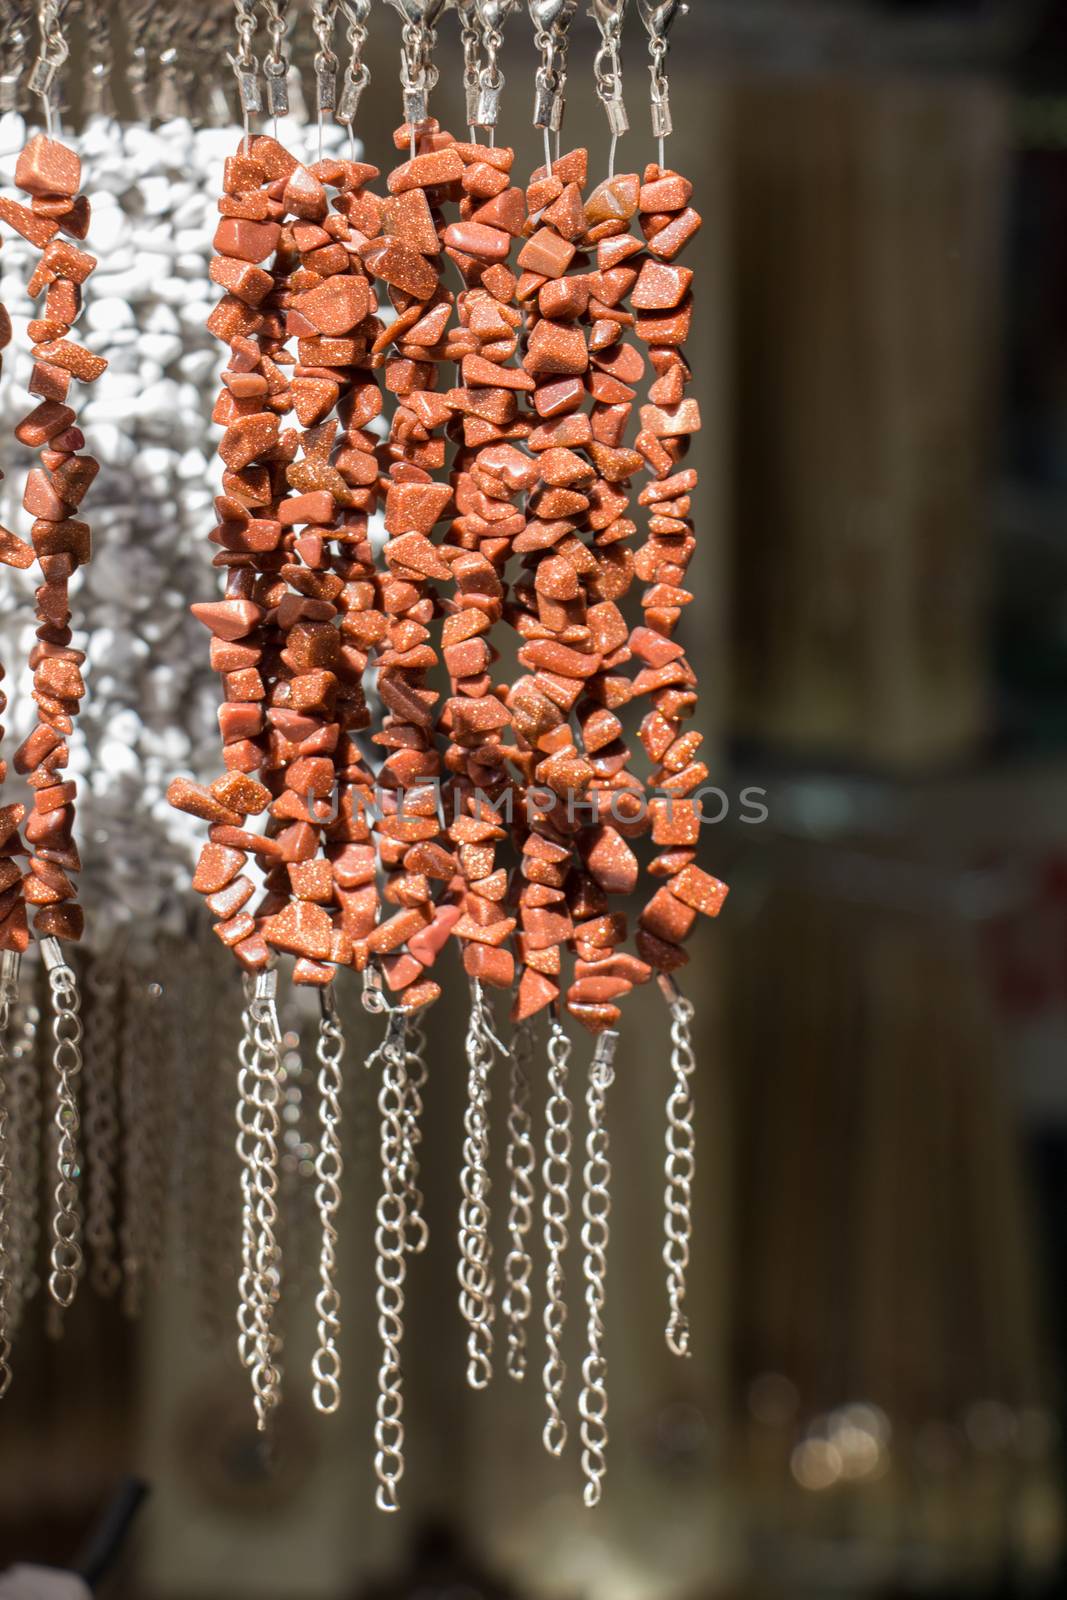  Beads of various color by berkay